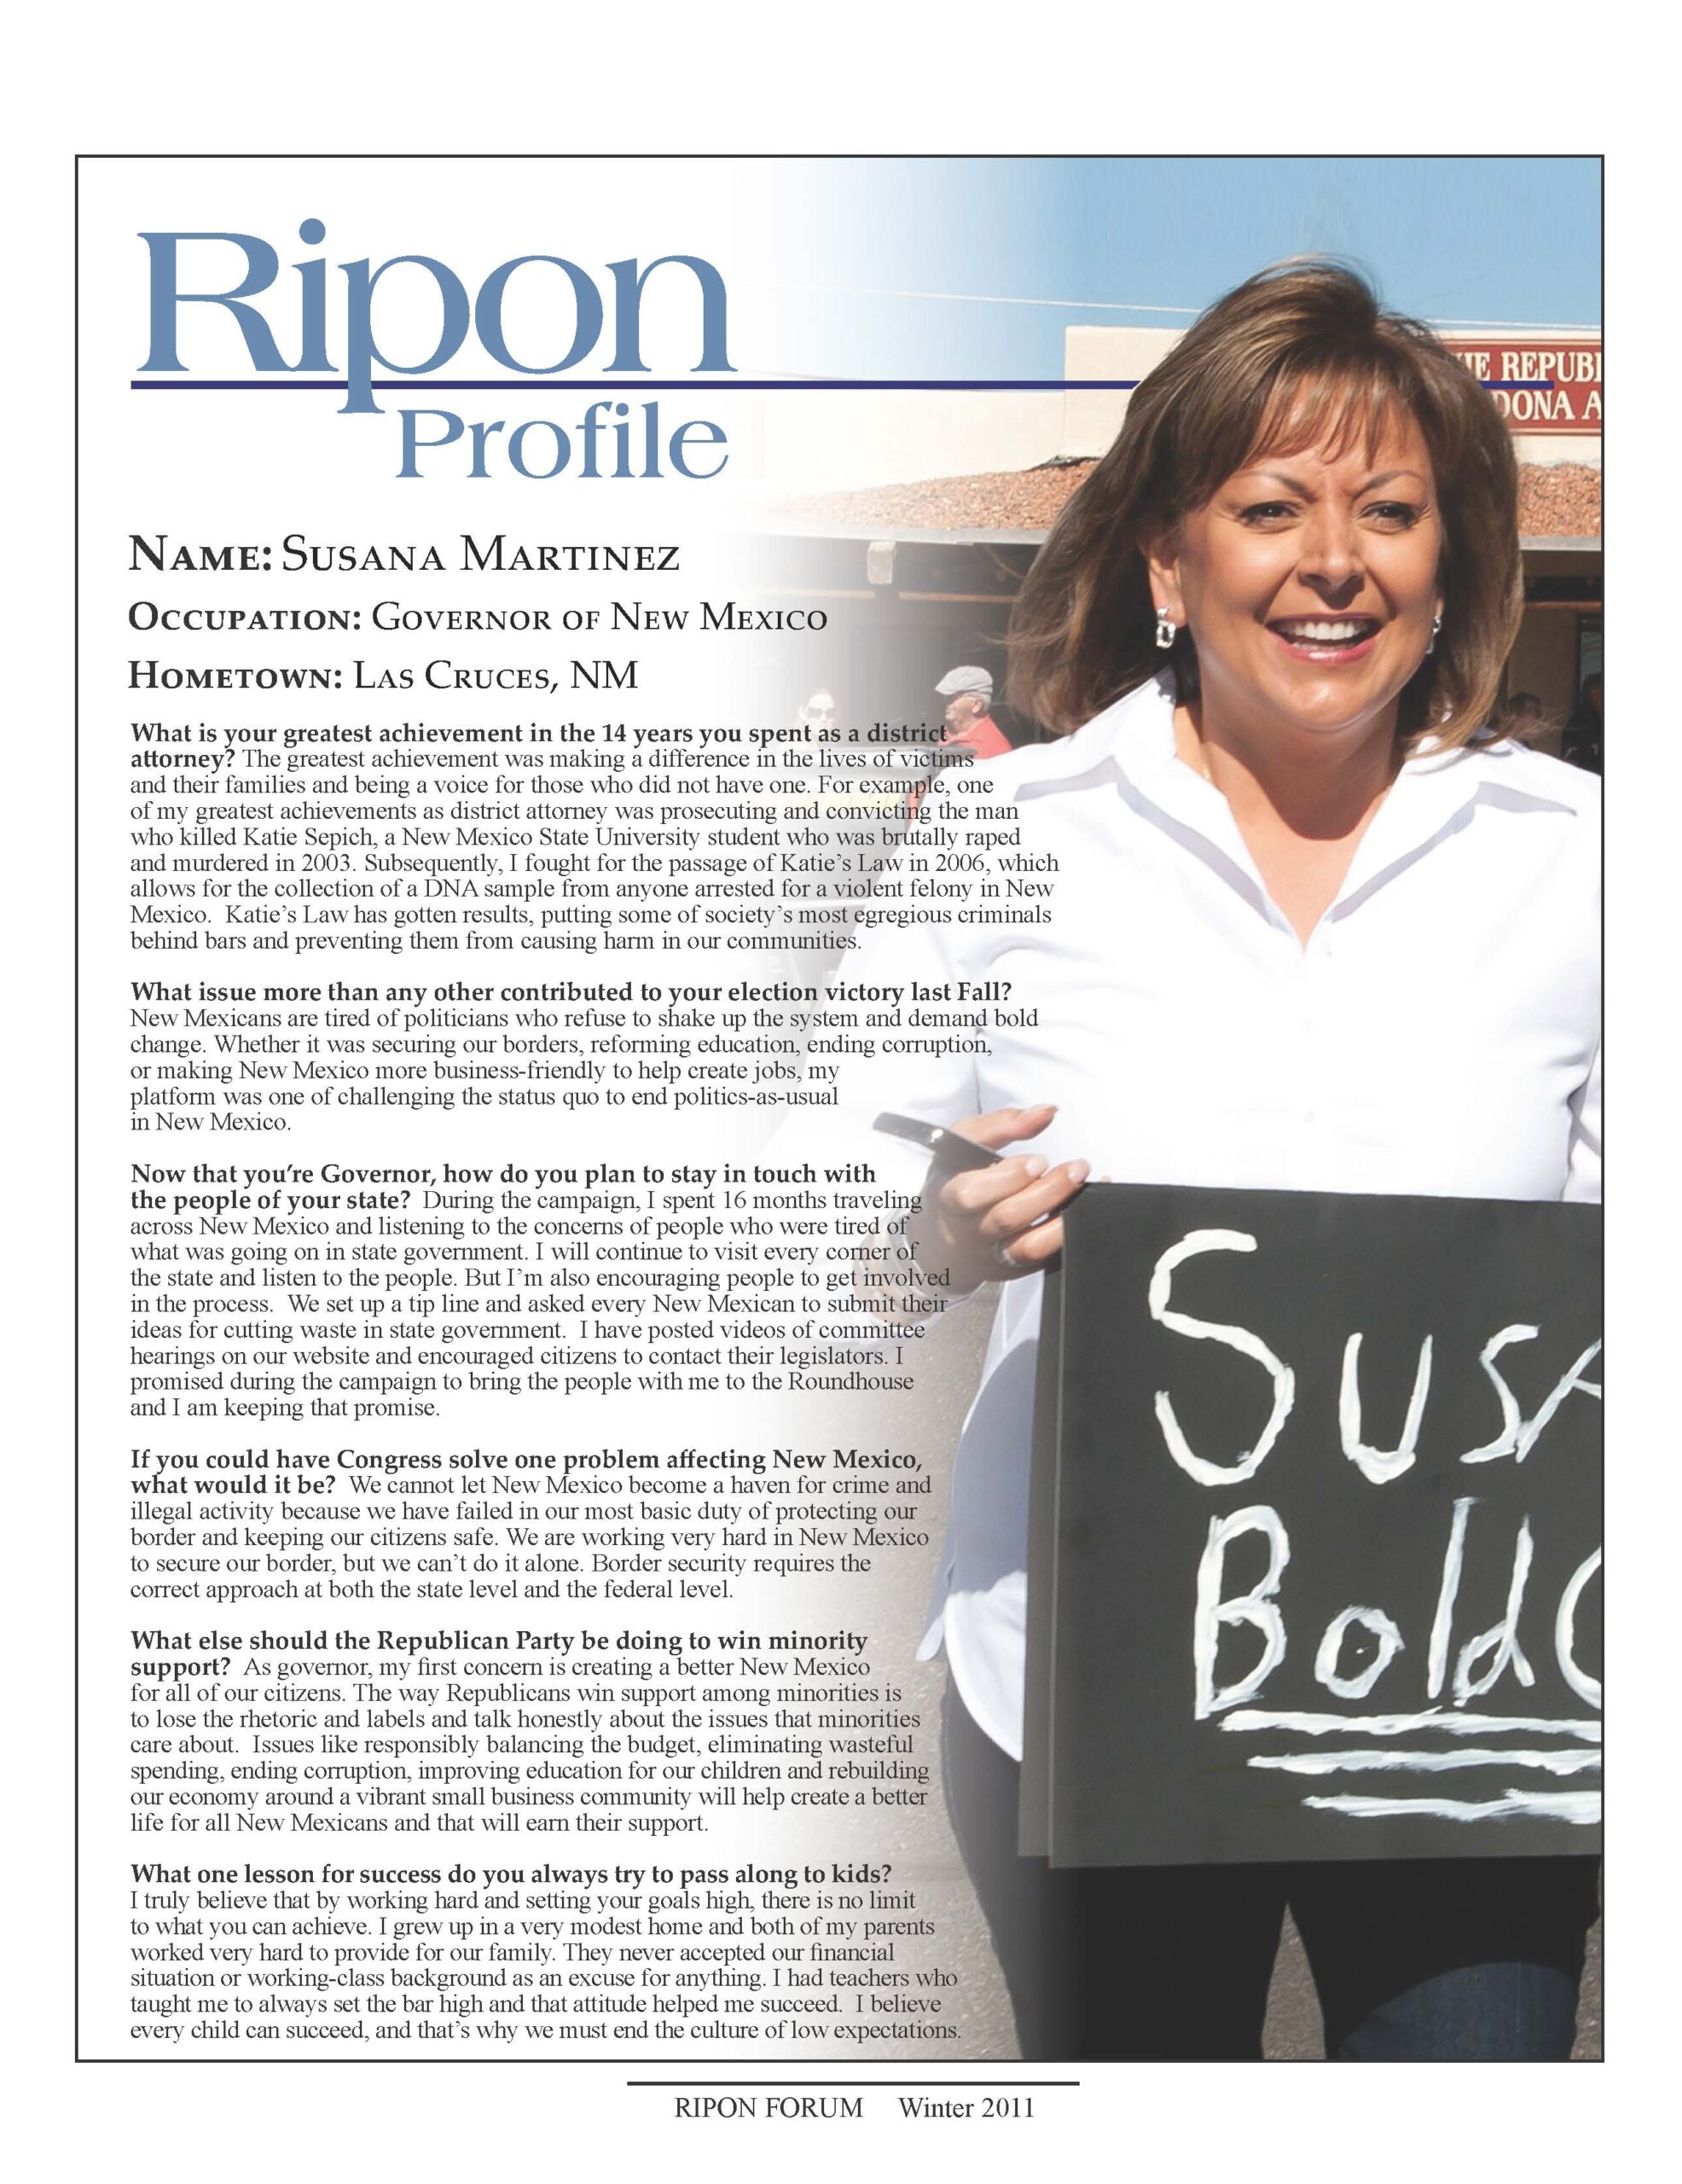 The Ripon Profile of Susana Martinez